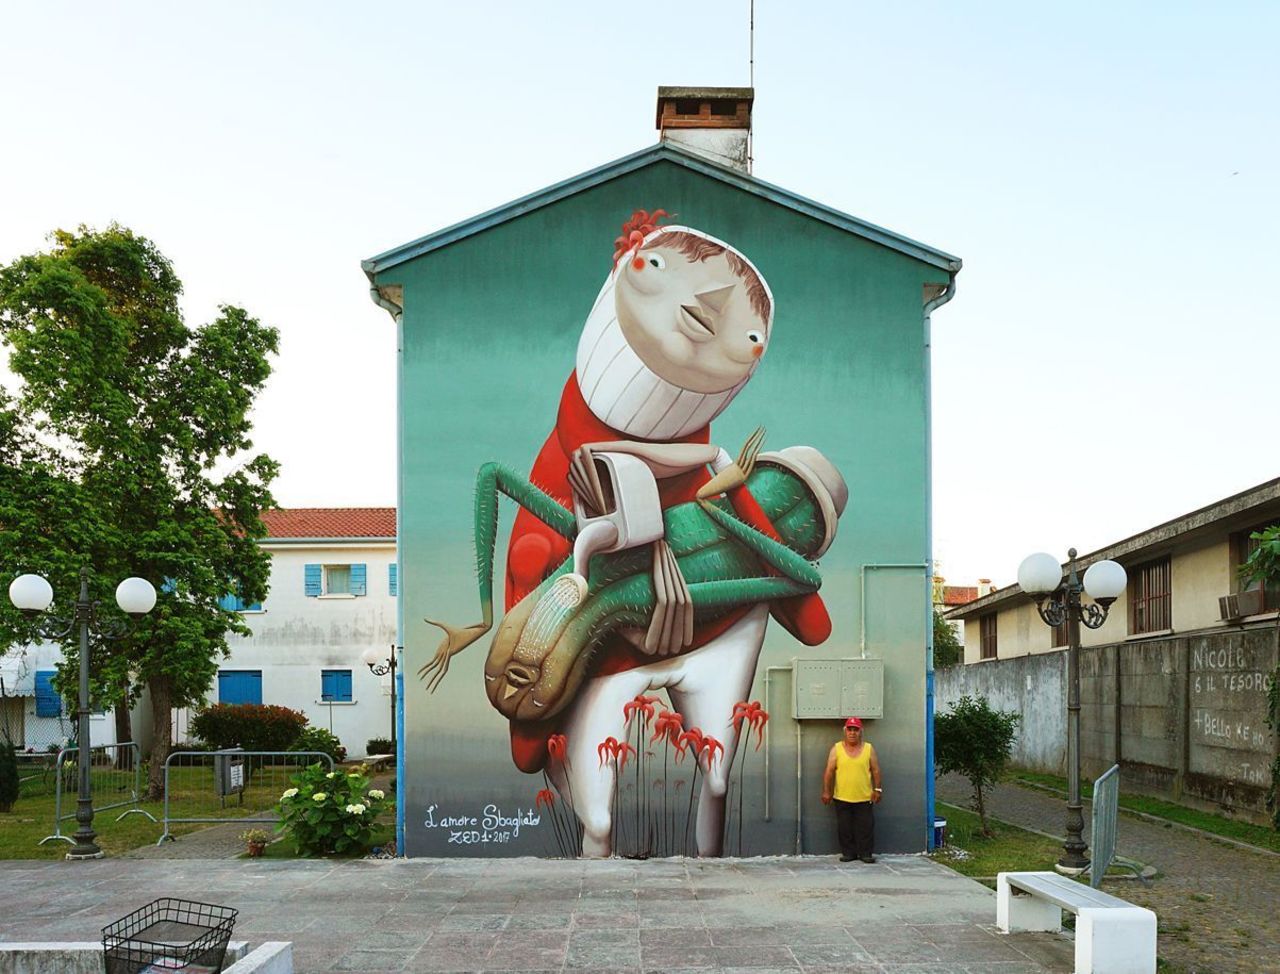 “The Wrong Love” by ZED1 in Dolo, Italy #streetart #mural #graffiti #art https://t.co/ztfzTHsrt3